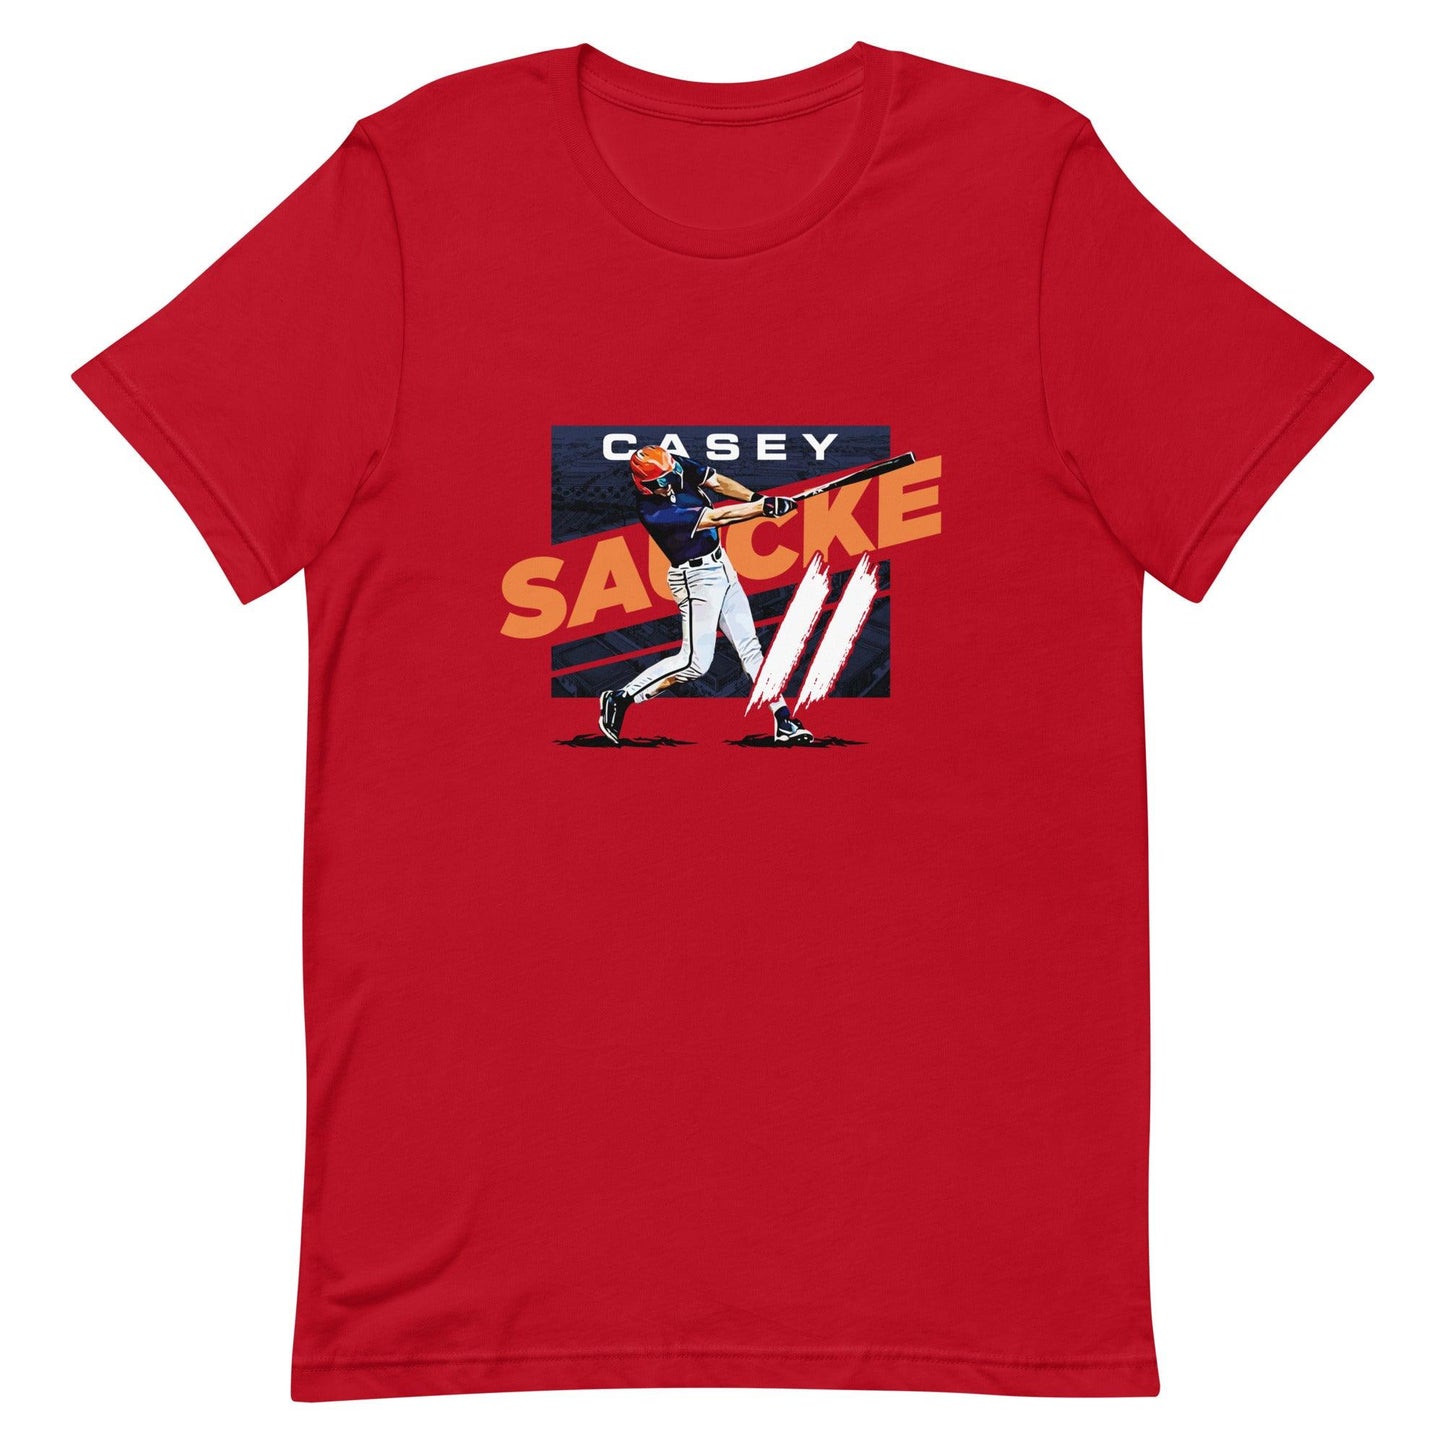 Casey Saucke II “Essential” t-shirt - Fan Arch